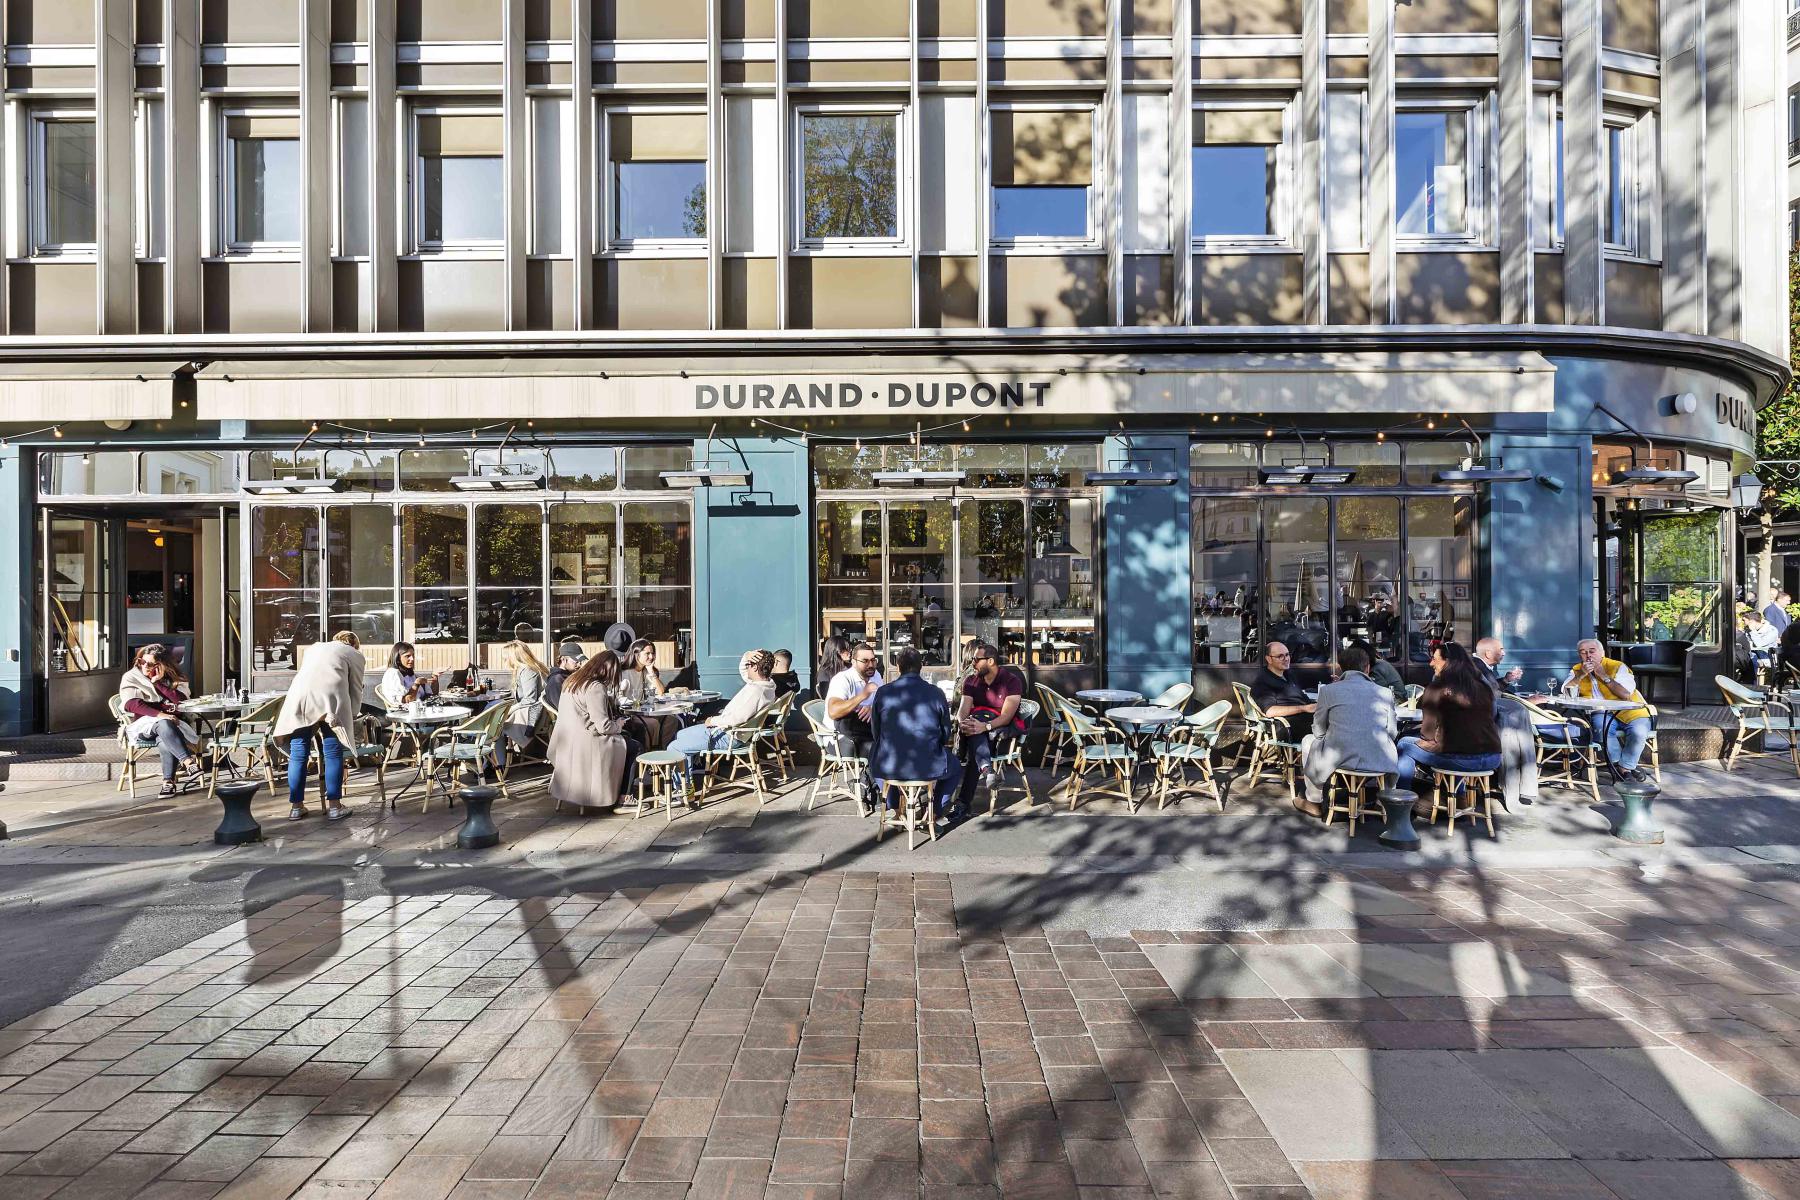 façades de café-restaurant avec portes repliables accordéon